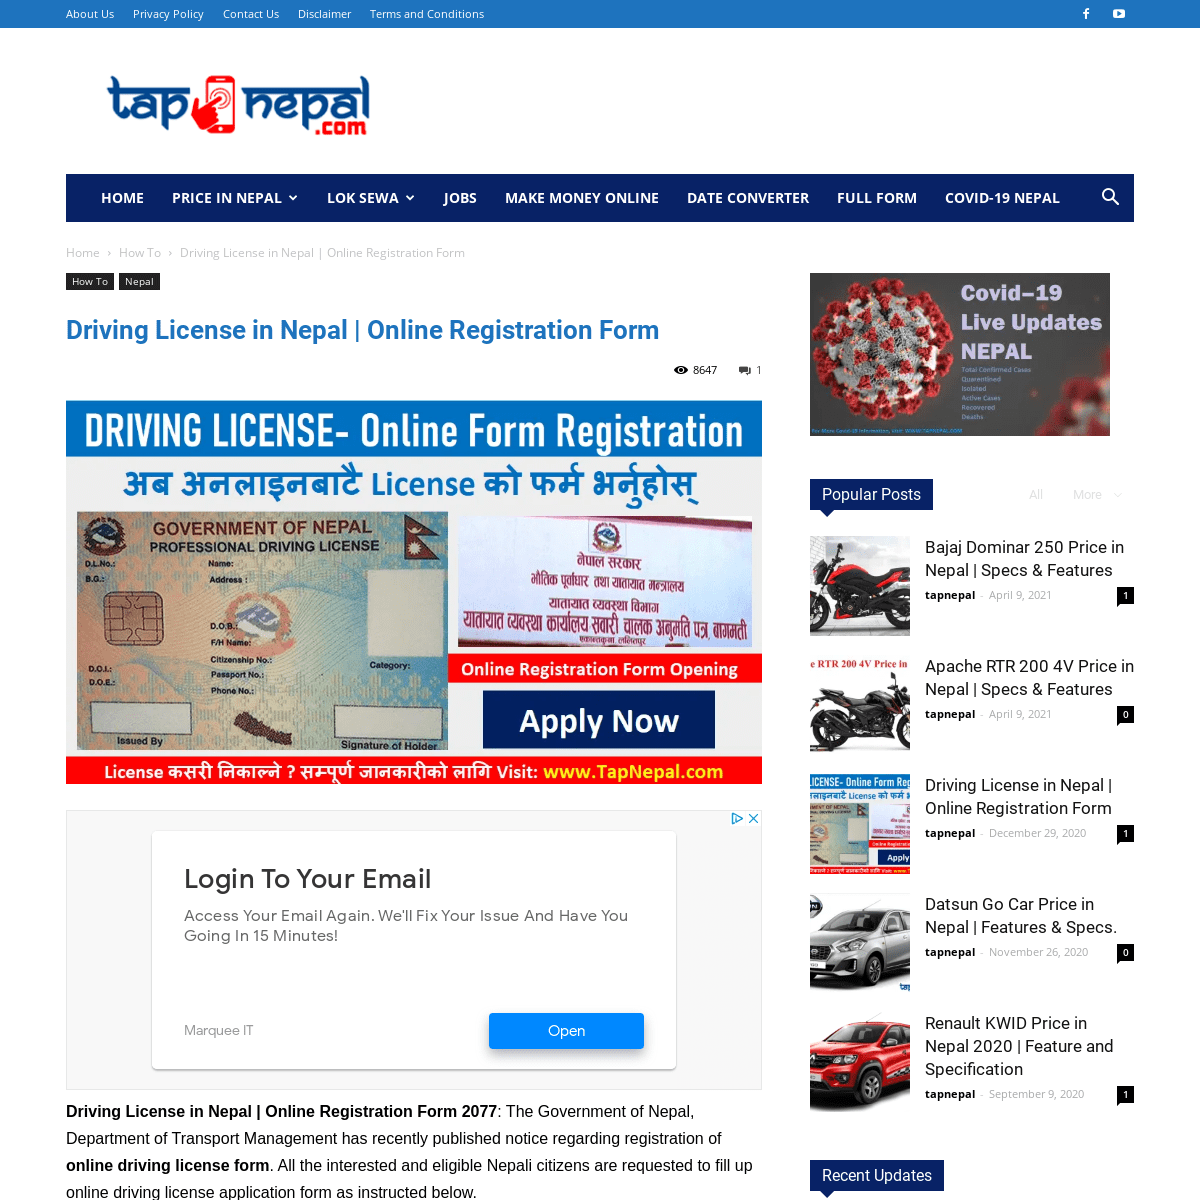 A complete backup of https://tapnepal.com/driving-license-in-nepal-online-registration-form/